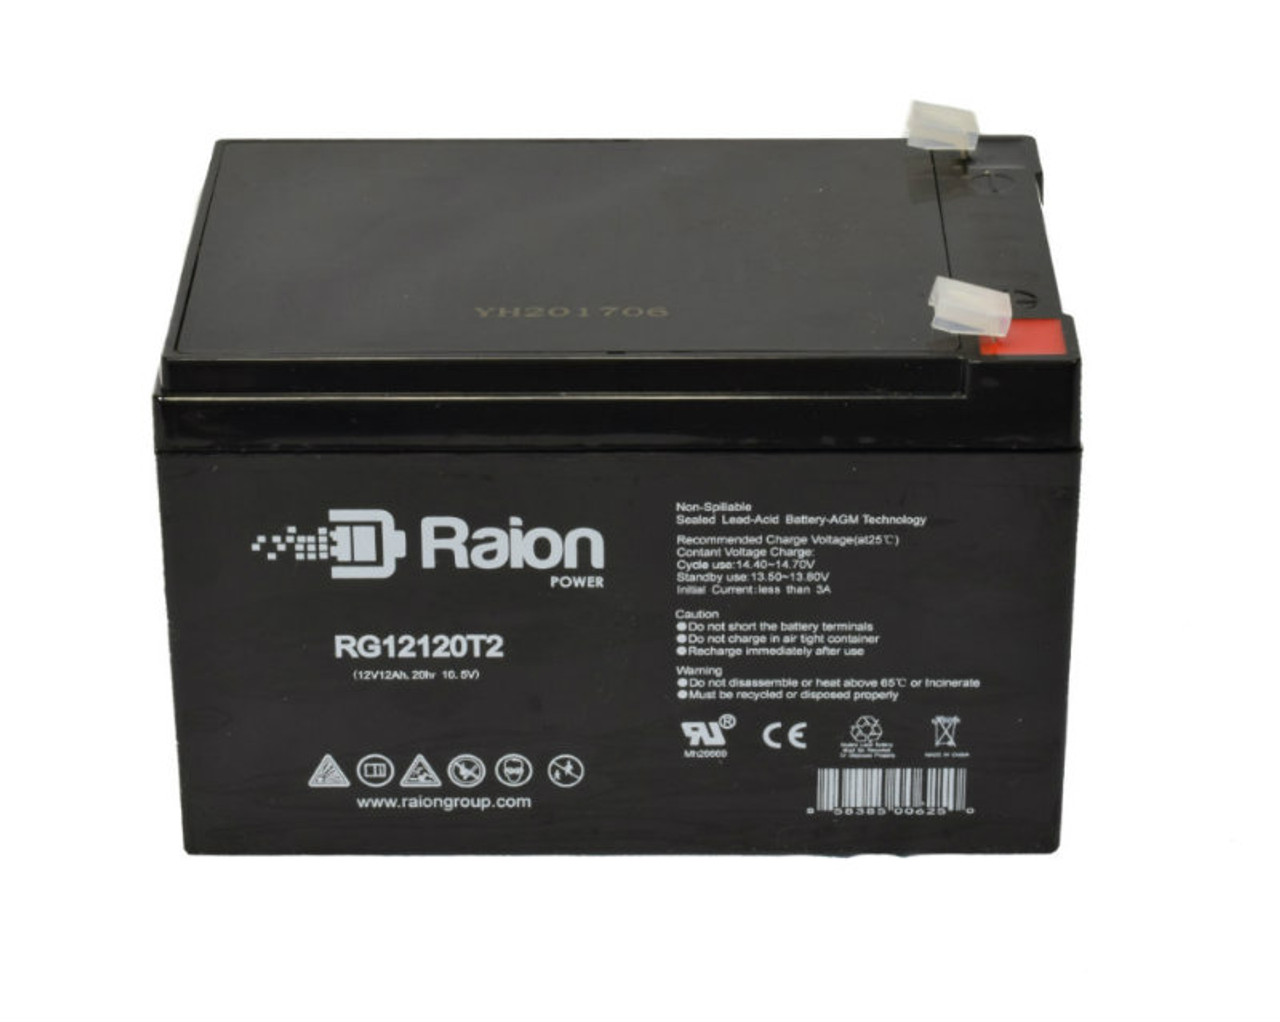 Raion Power RG12120T2 SLA Battery for X-treme XW-100